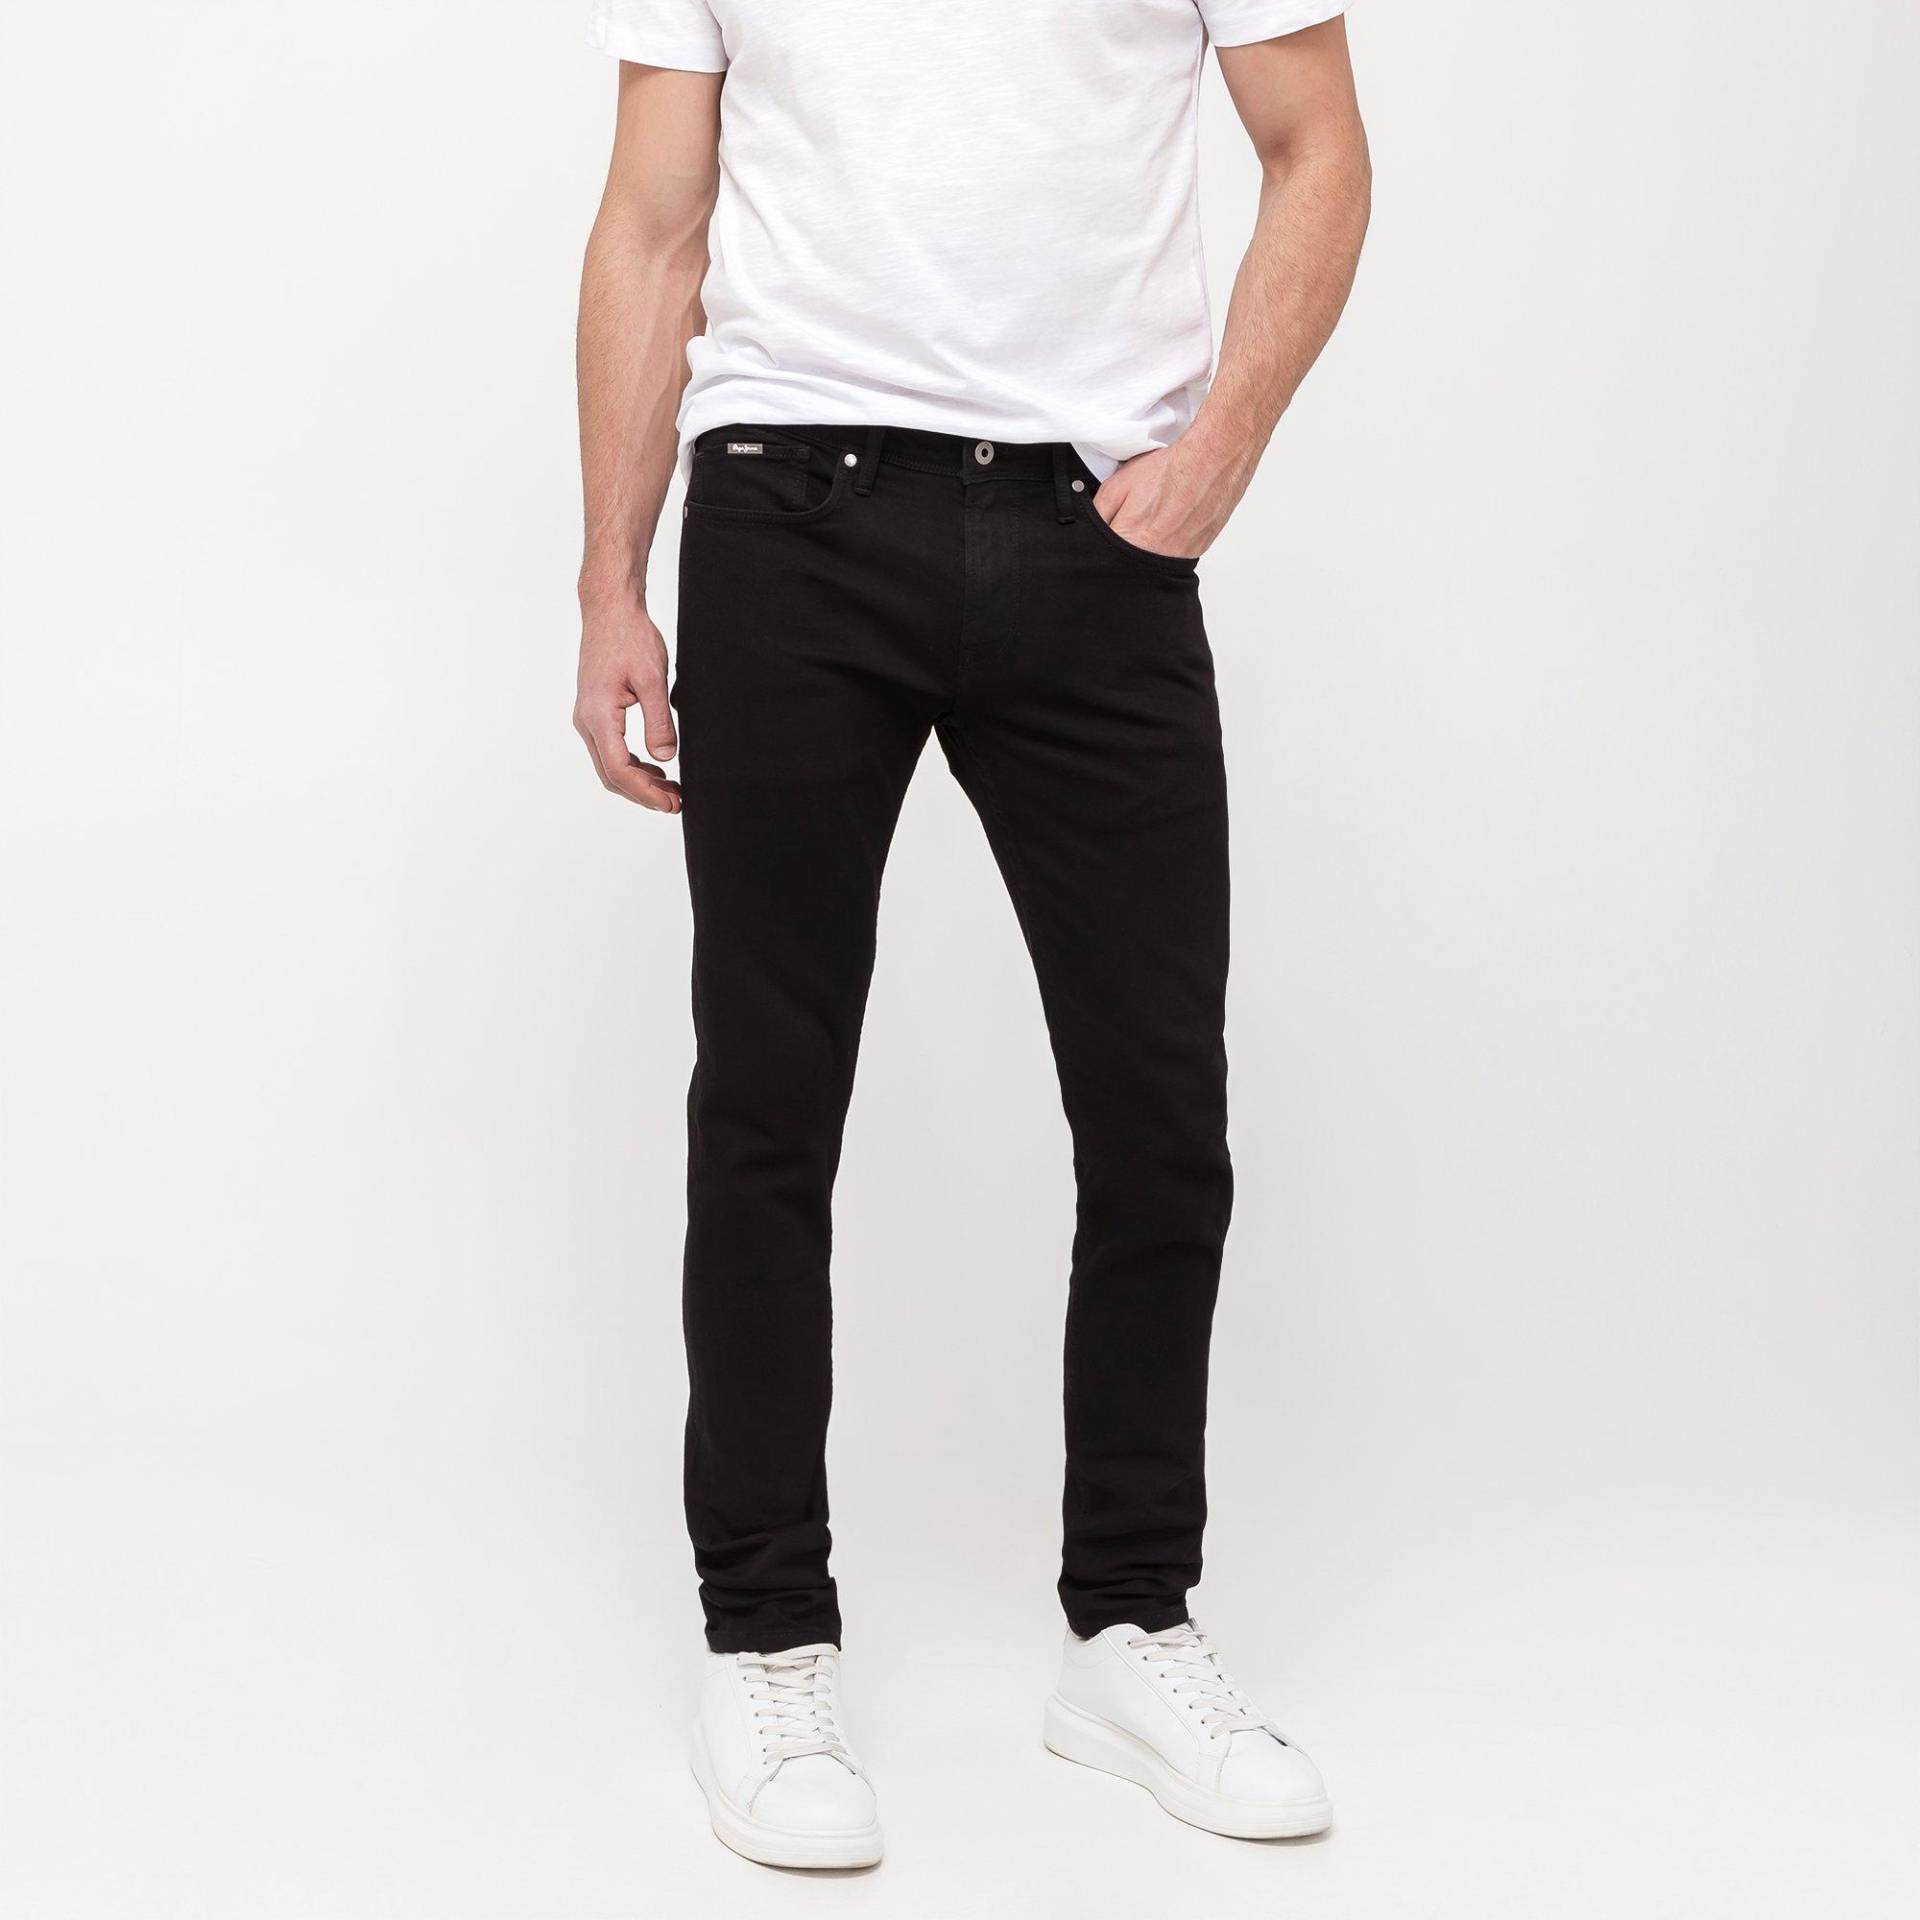 Jeans, Skinny Fit Herren Schwarz L32/W36 von Pepe Jeans